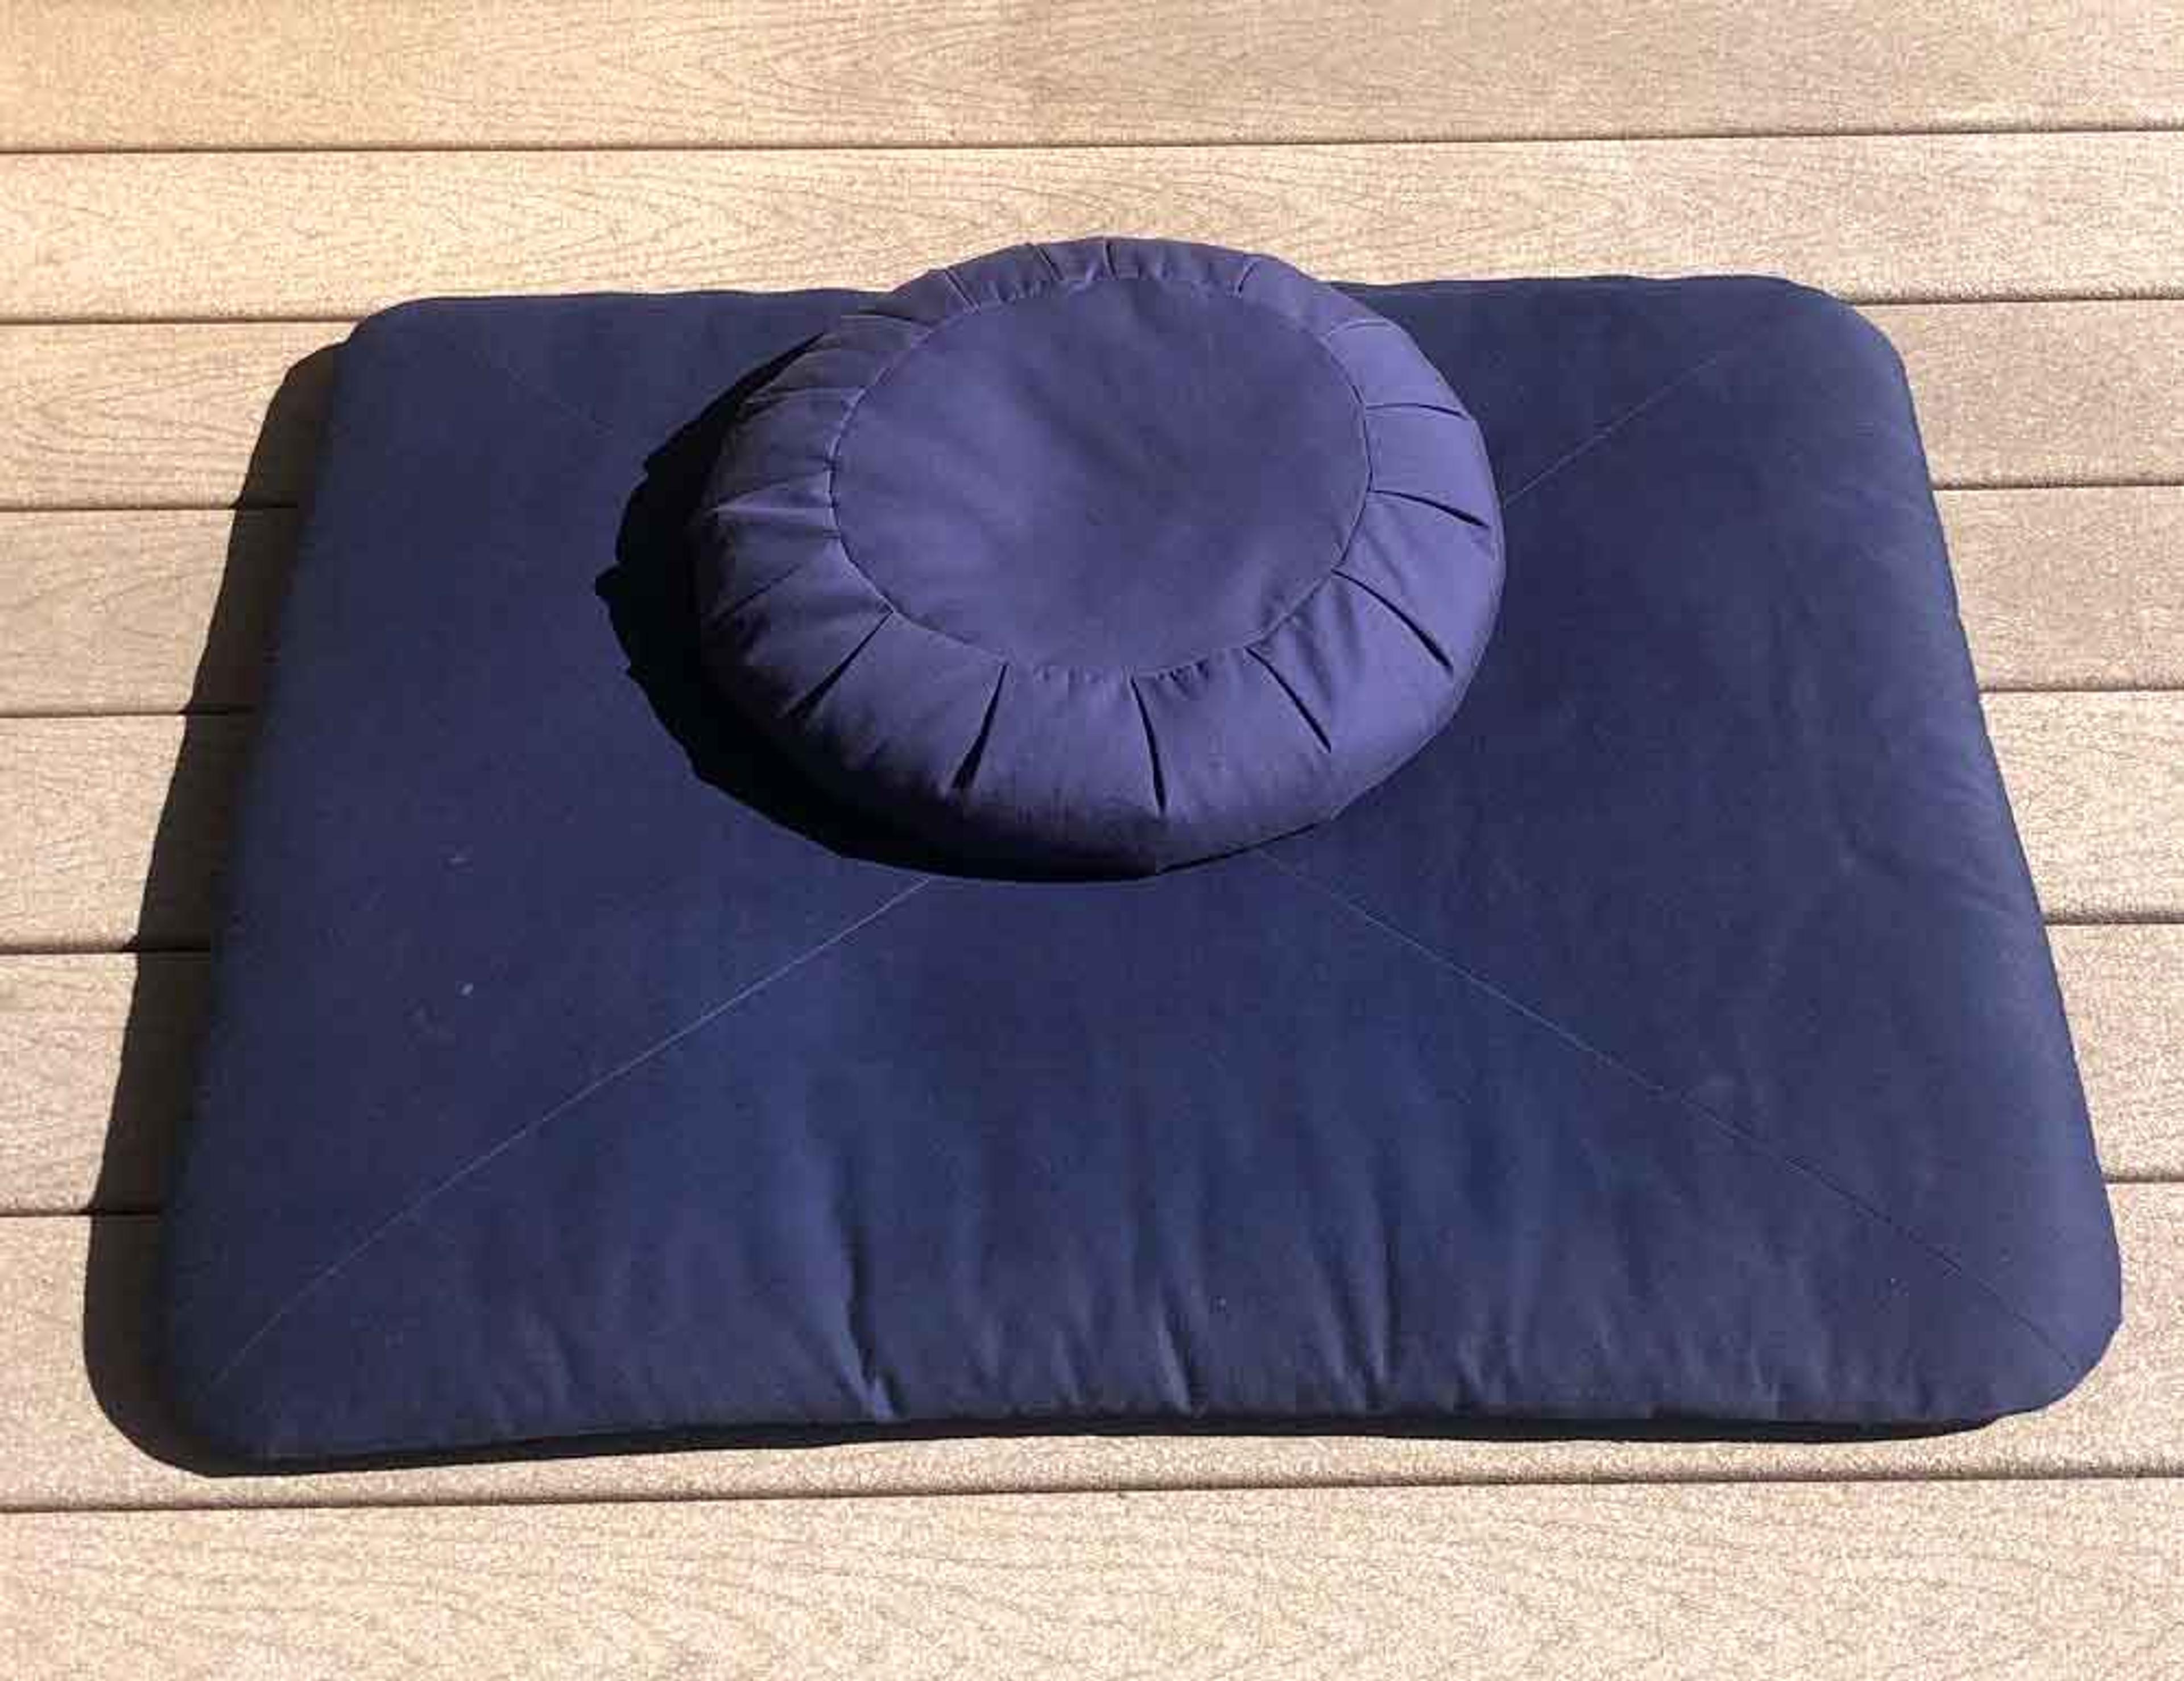 Zafu on a zabuton cushion. Karme Choling Meditation Retreat Center, Vermont